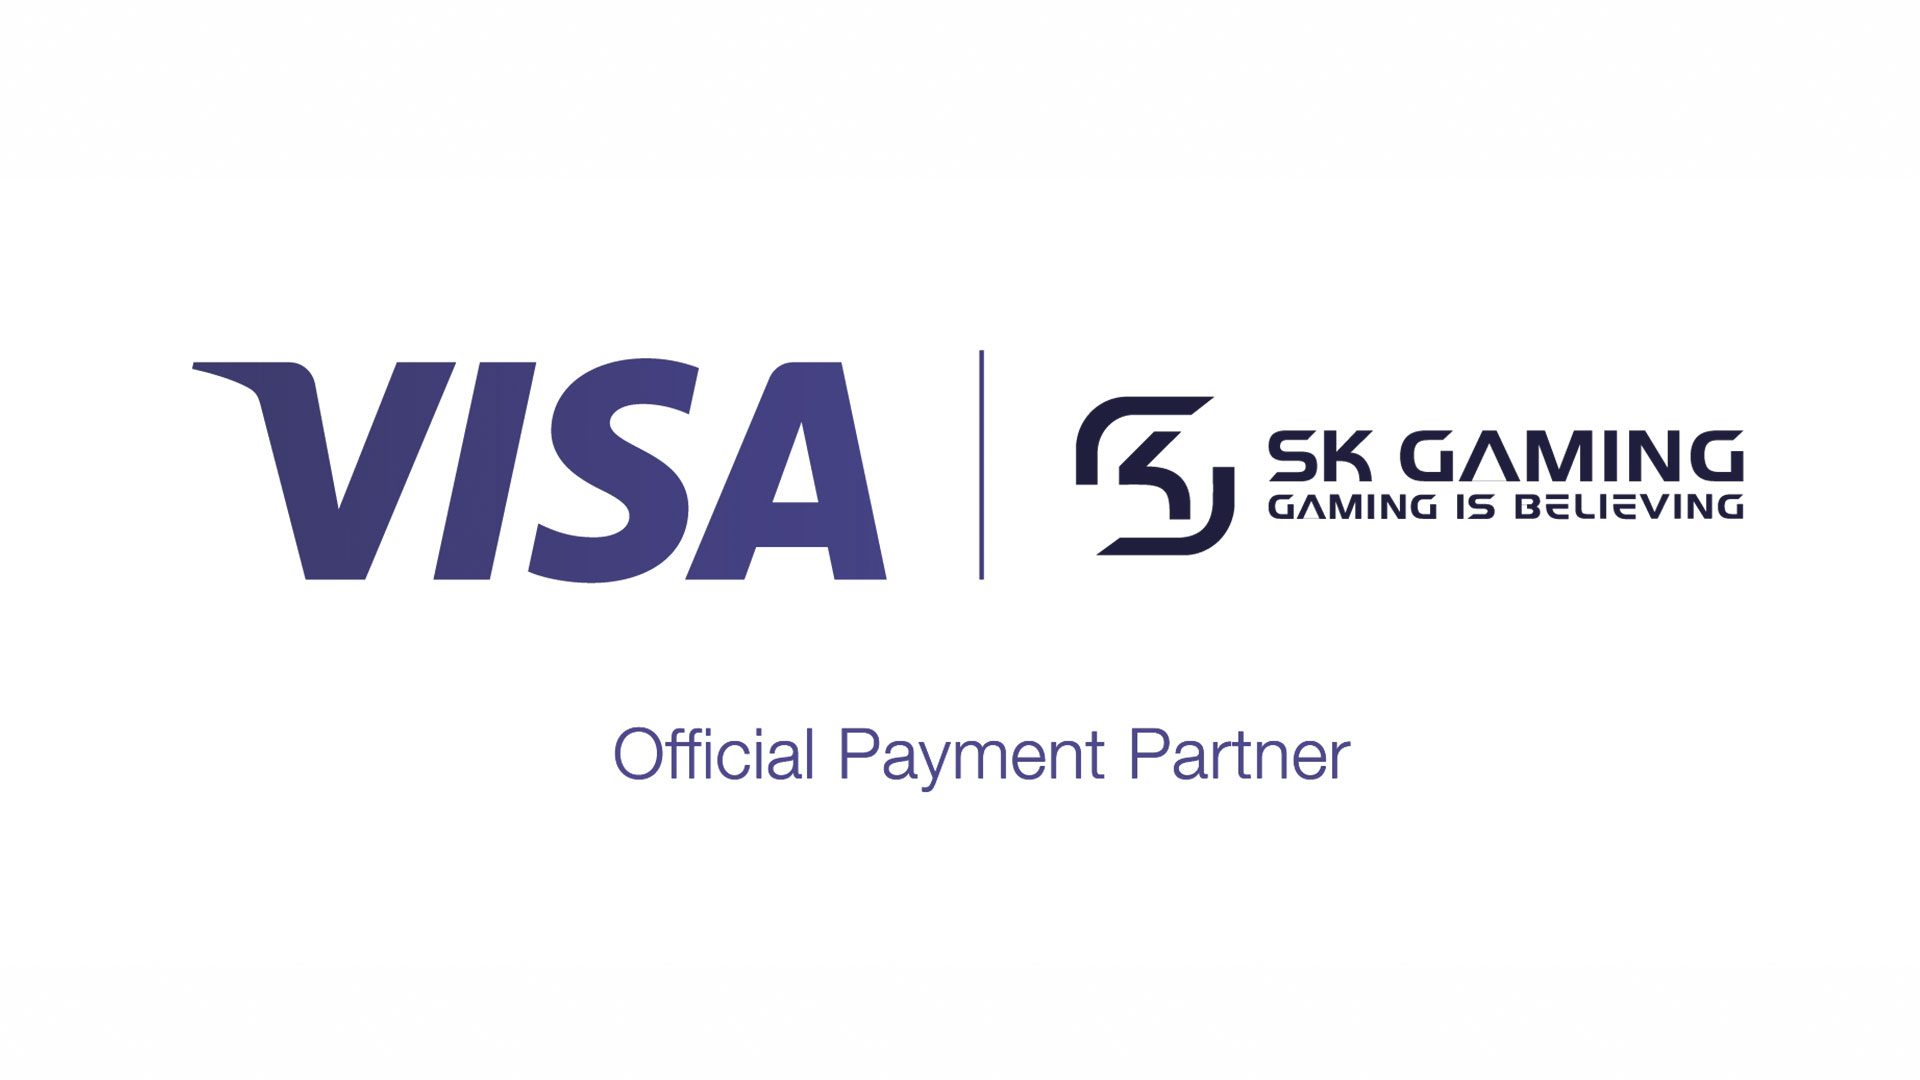 Visa & Sk Gaming - Graphics , HD Wallpaper & Backgrounds